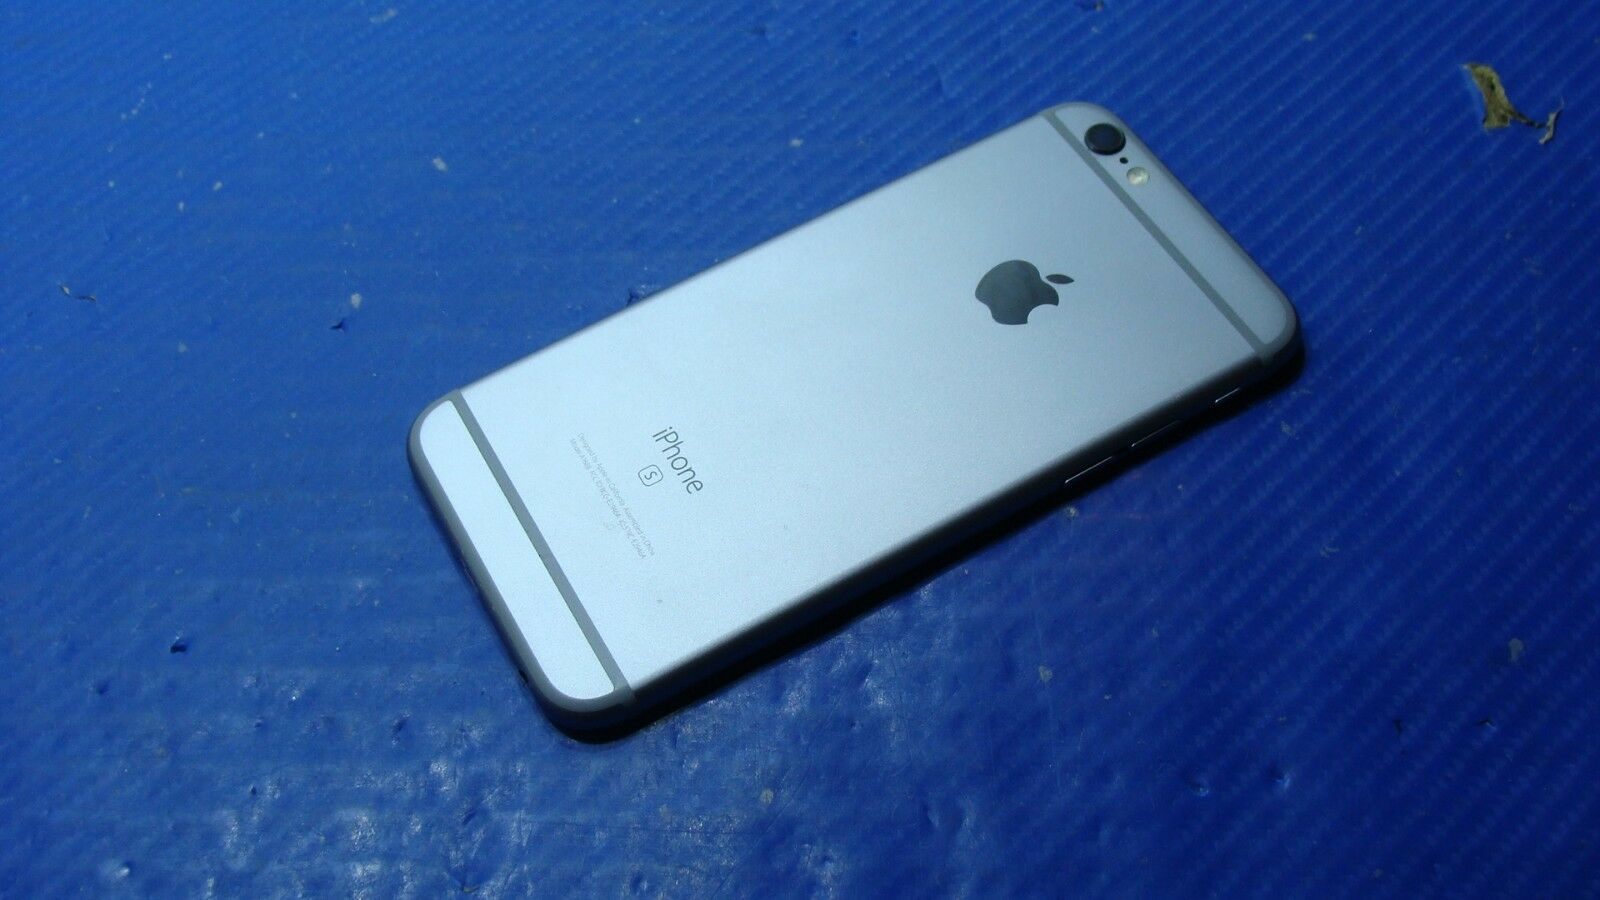 iPhone 6s Verizon A1688 4.7